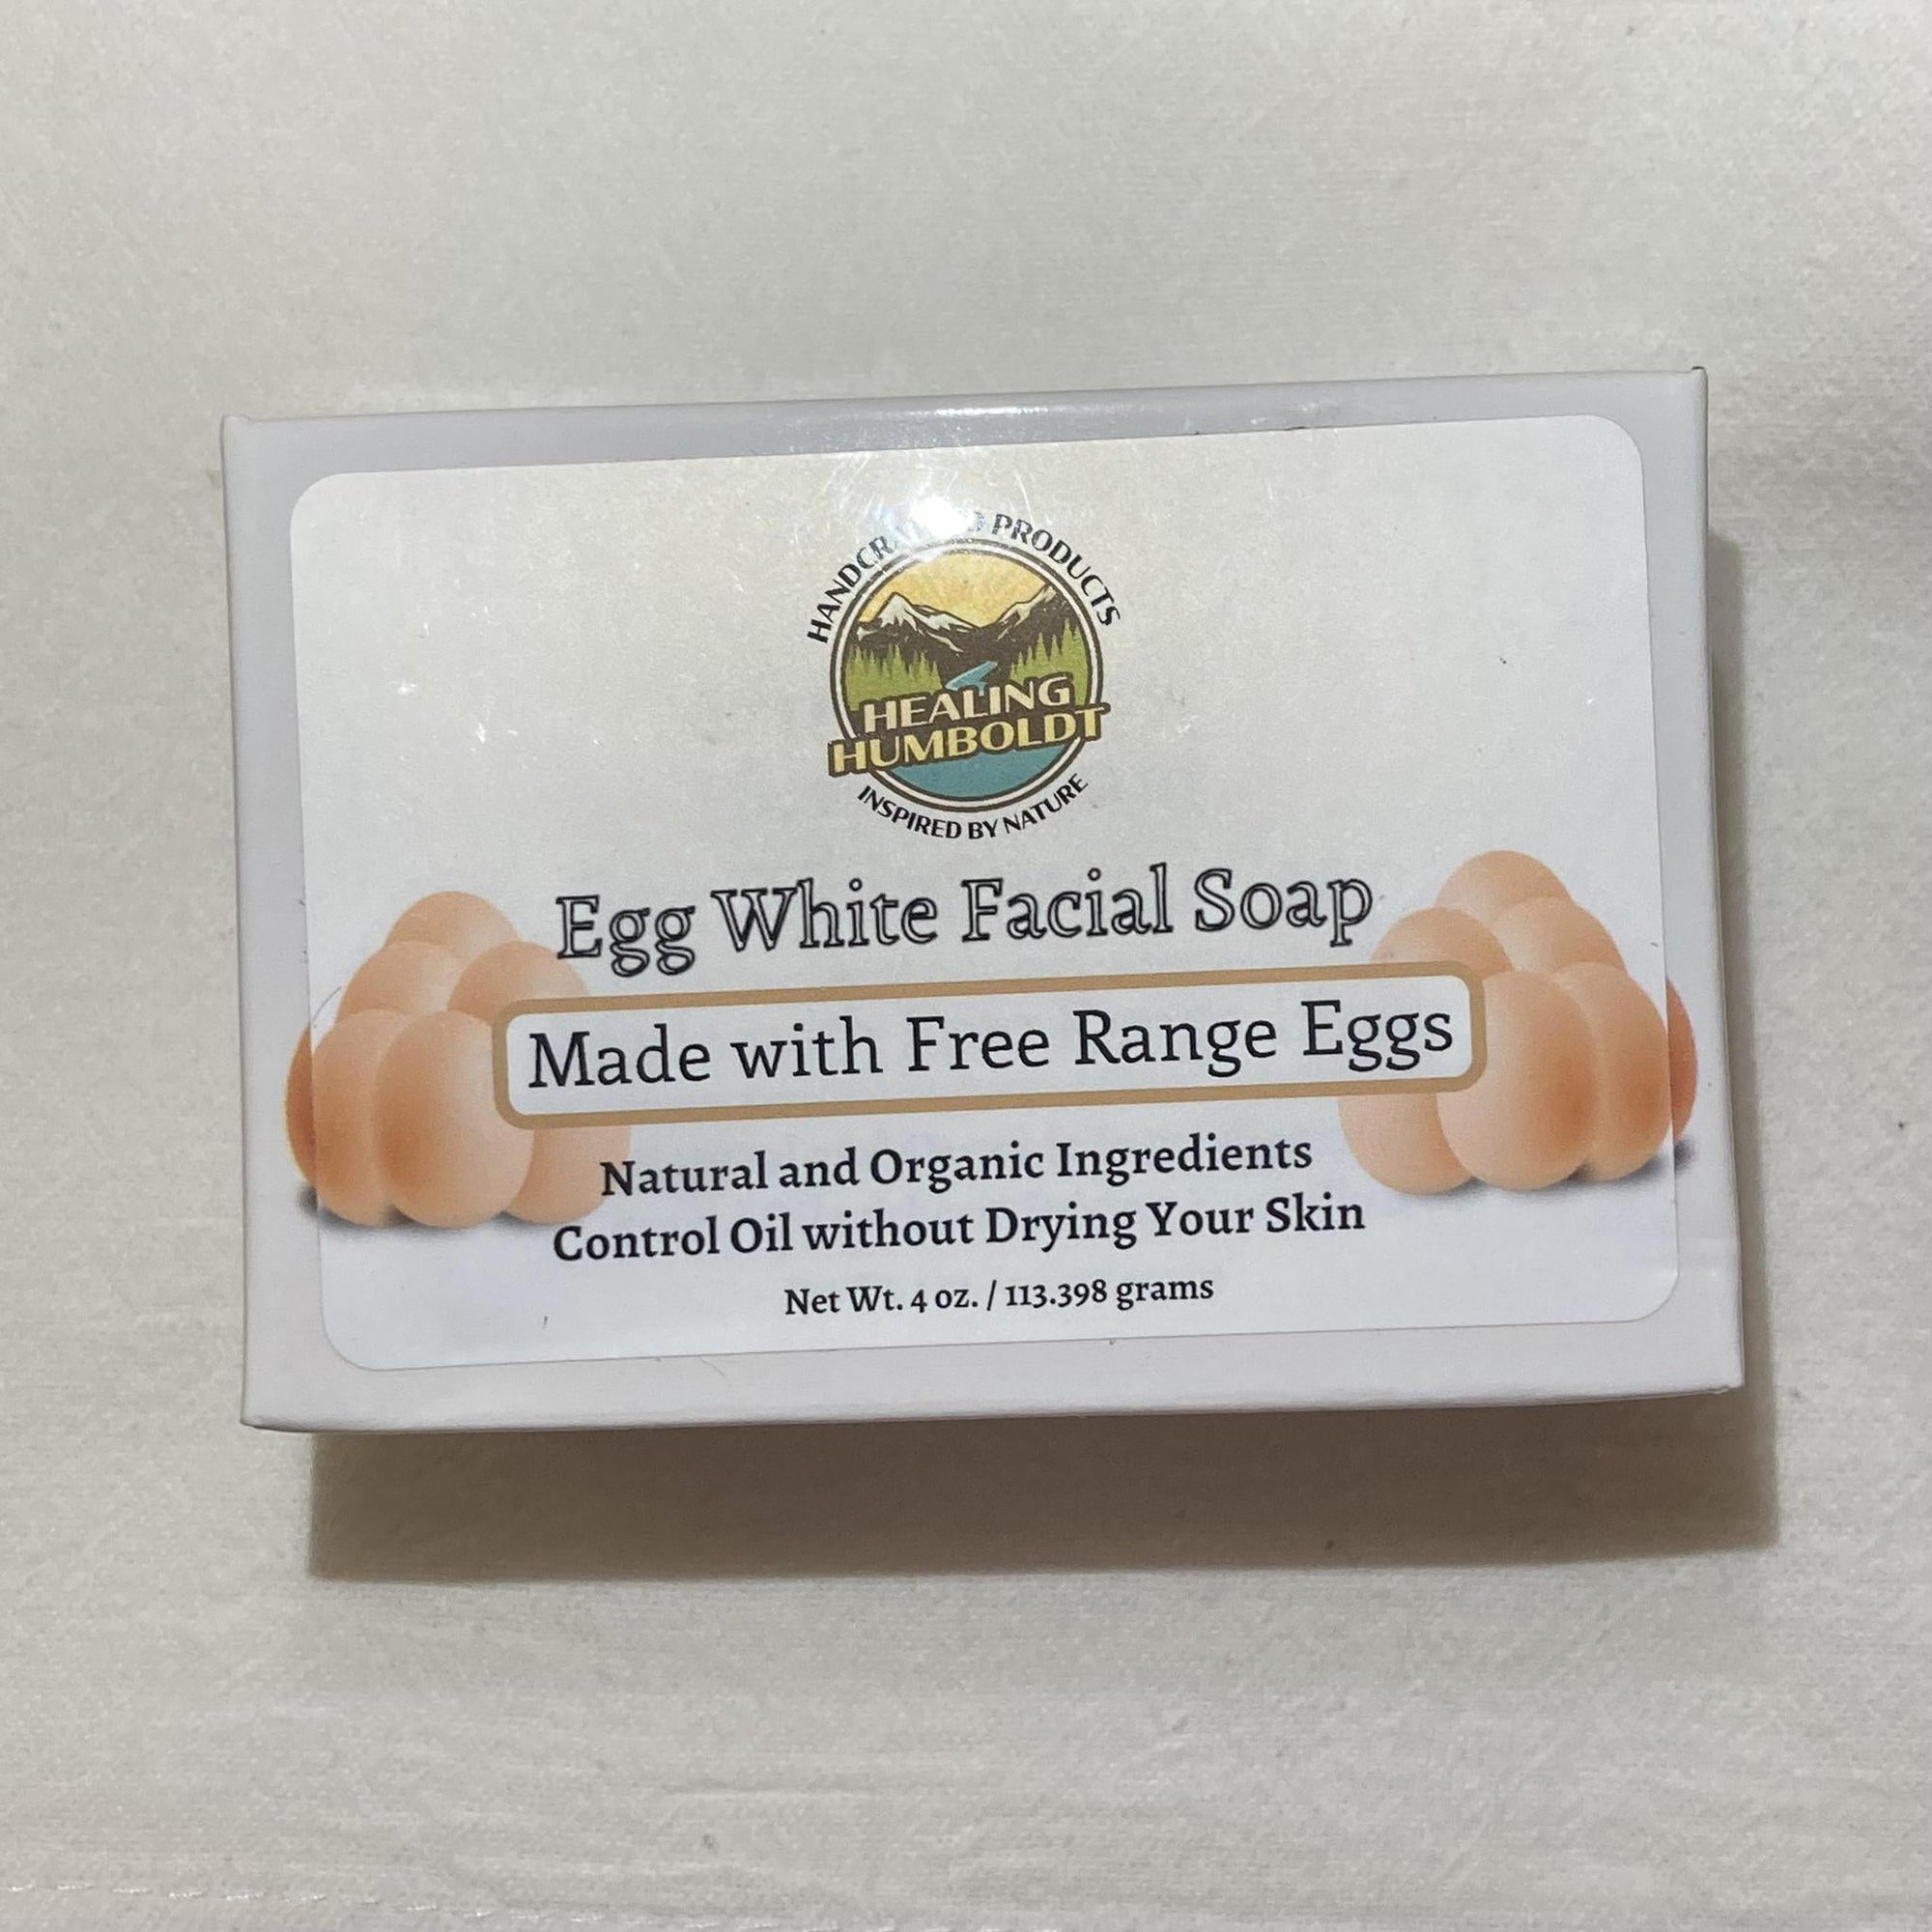 Healing Humboldt Egg White Facial Soap